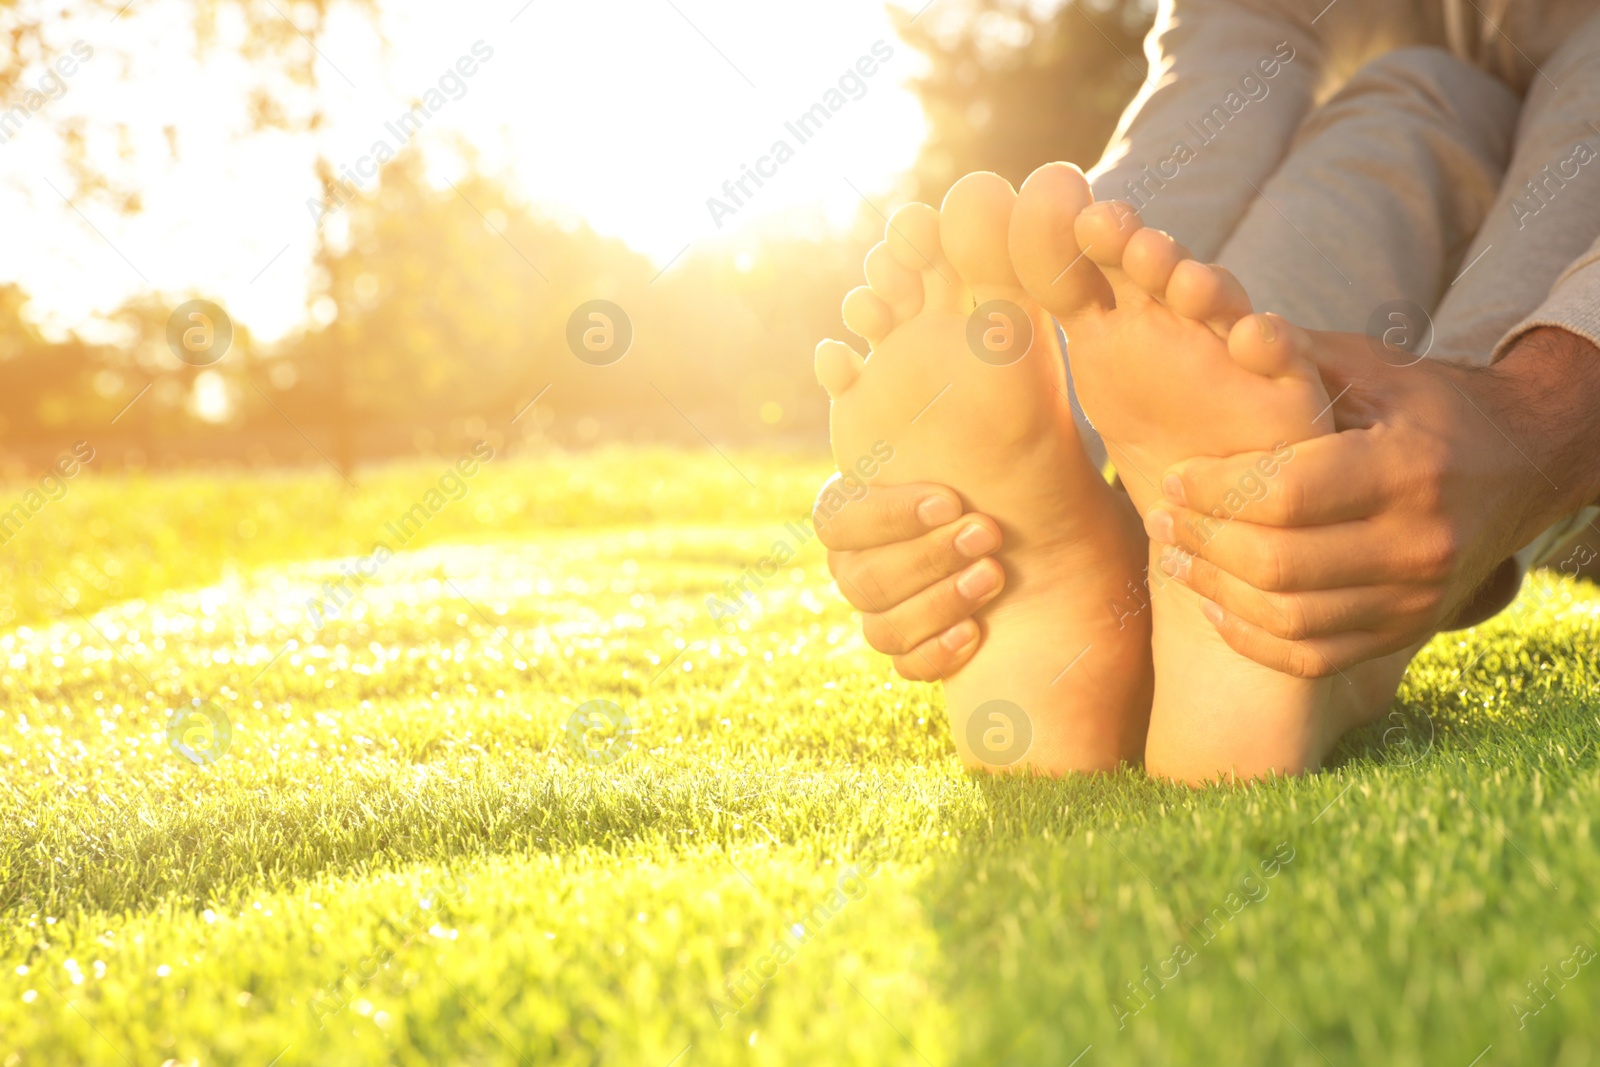 Photo of Man sitting barefoot on fresh green grass outdoors, closeup